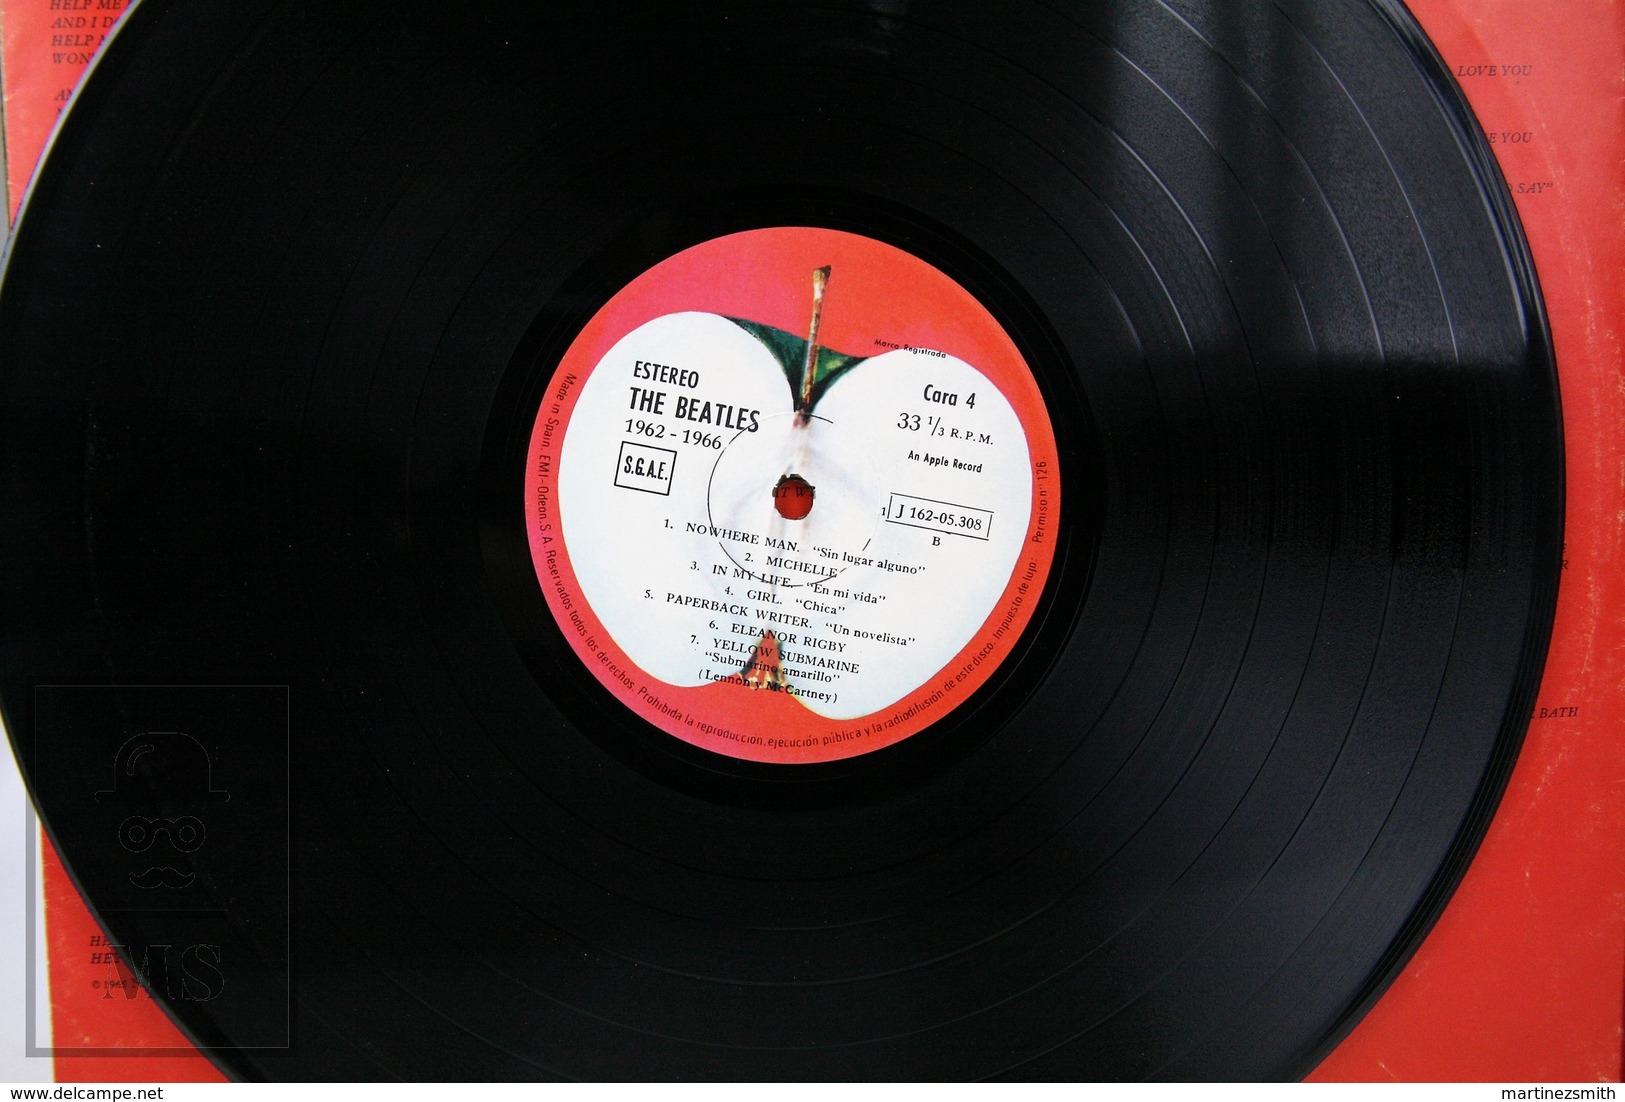 The Beatles: 1962-1966 Double Album - 33 RPM LP -Spanish Ed. Apple Records 1963 - Disco, Pop